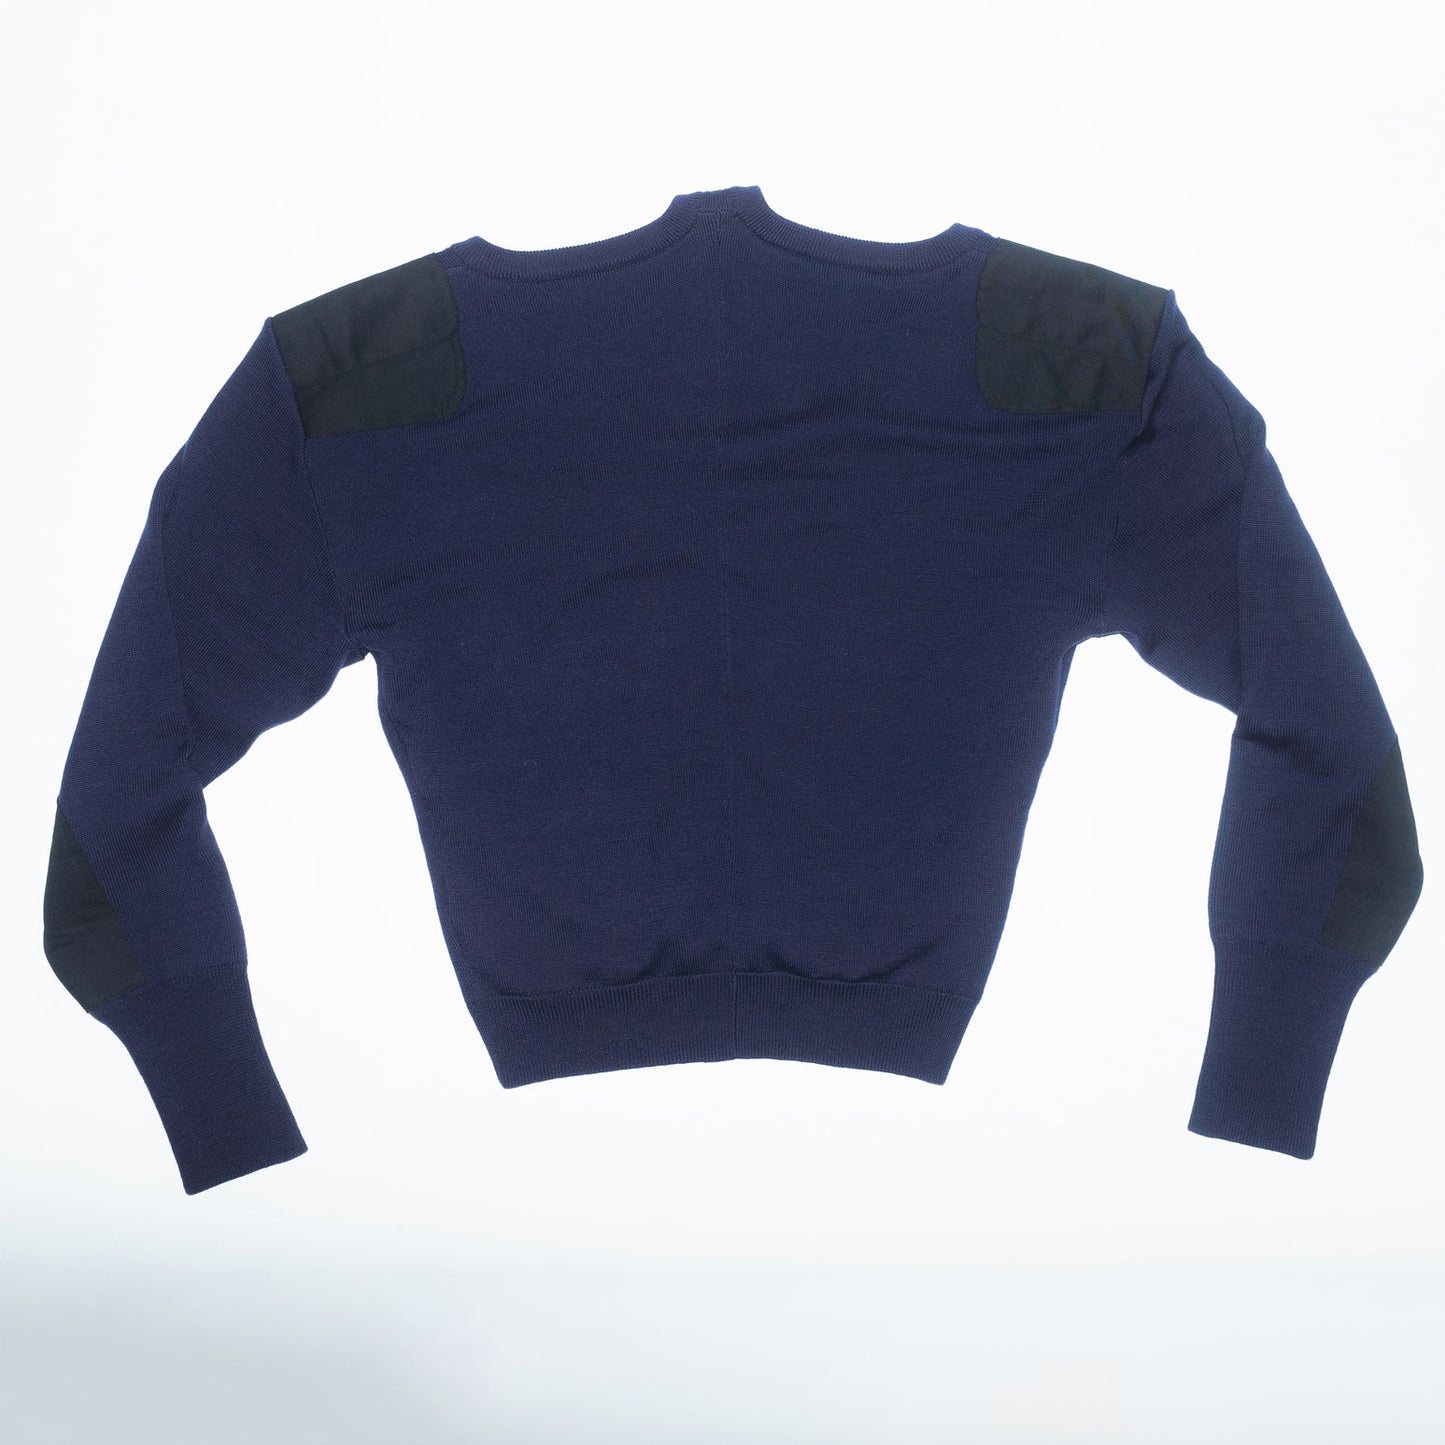 Runway Kangeroo Sweater with Double Neckline in navy blue